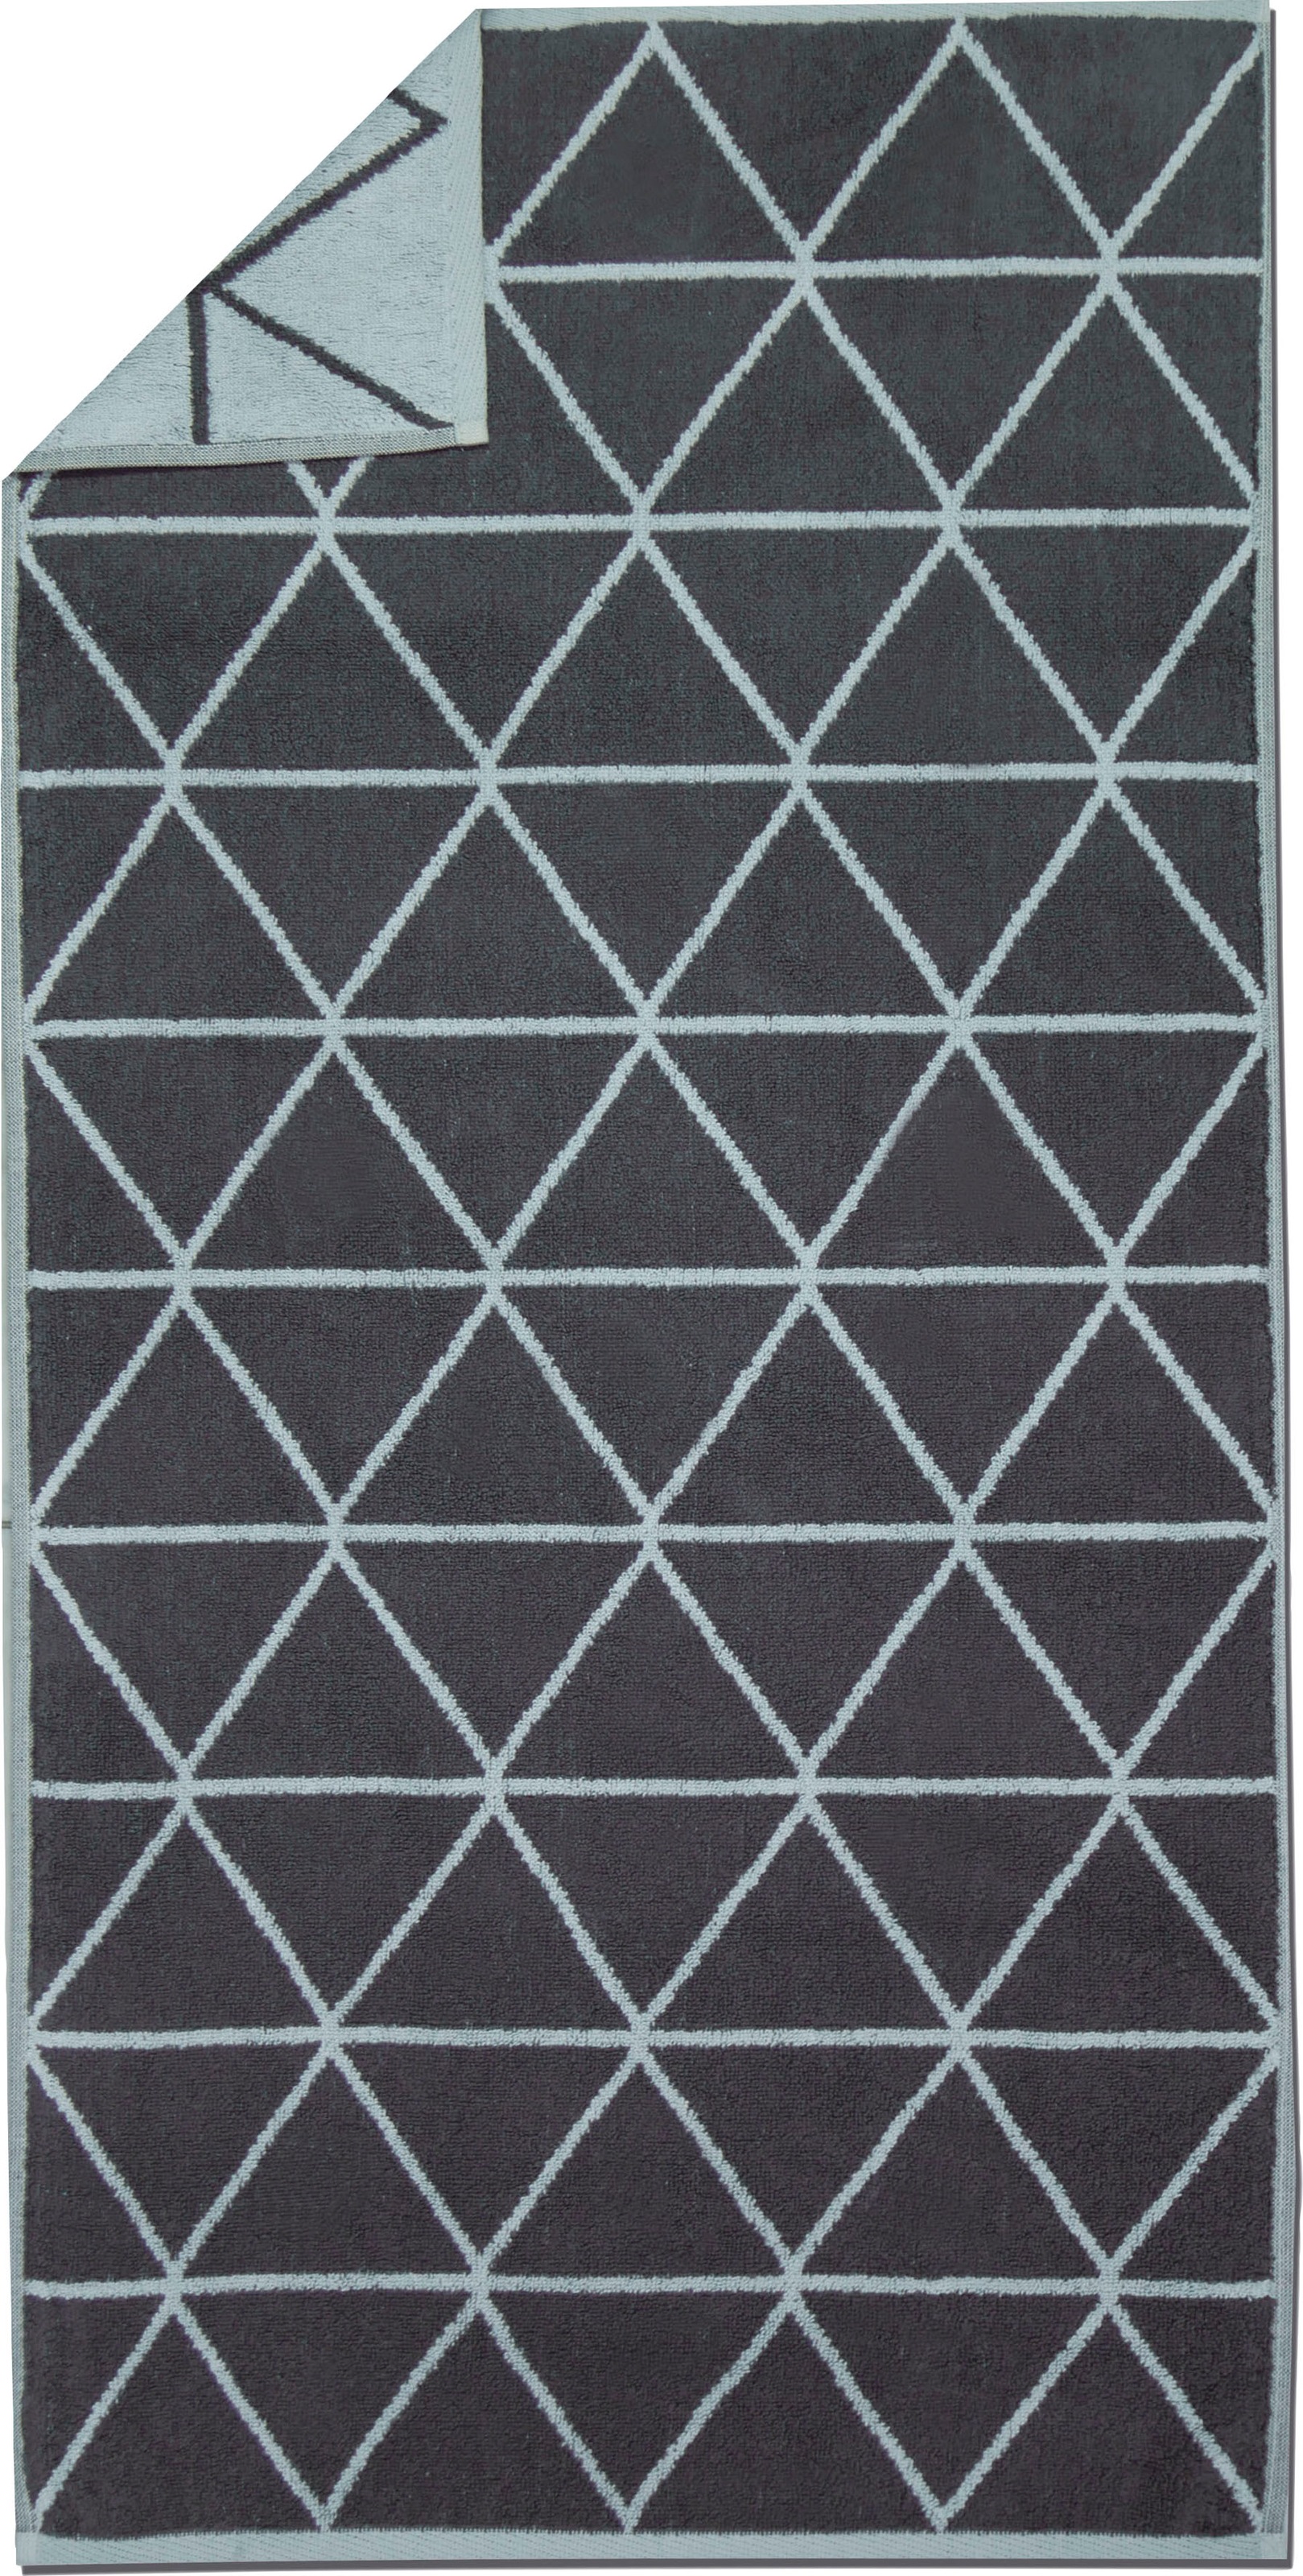 freundin Home Collection Handtücher »Freundin Triangle Graphics«, (2 St.),  mit skandinavischem Design kaufen bei OTTO